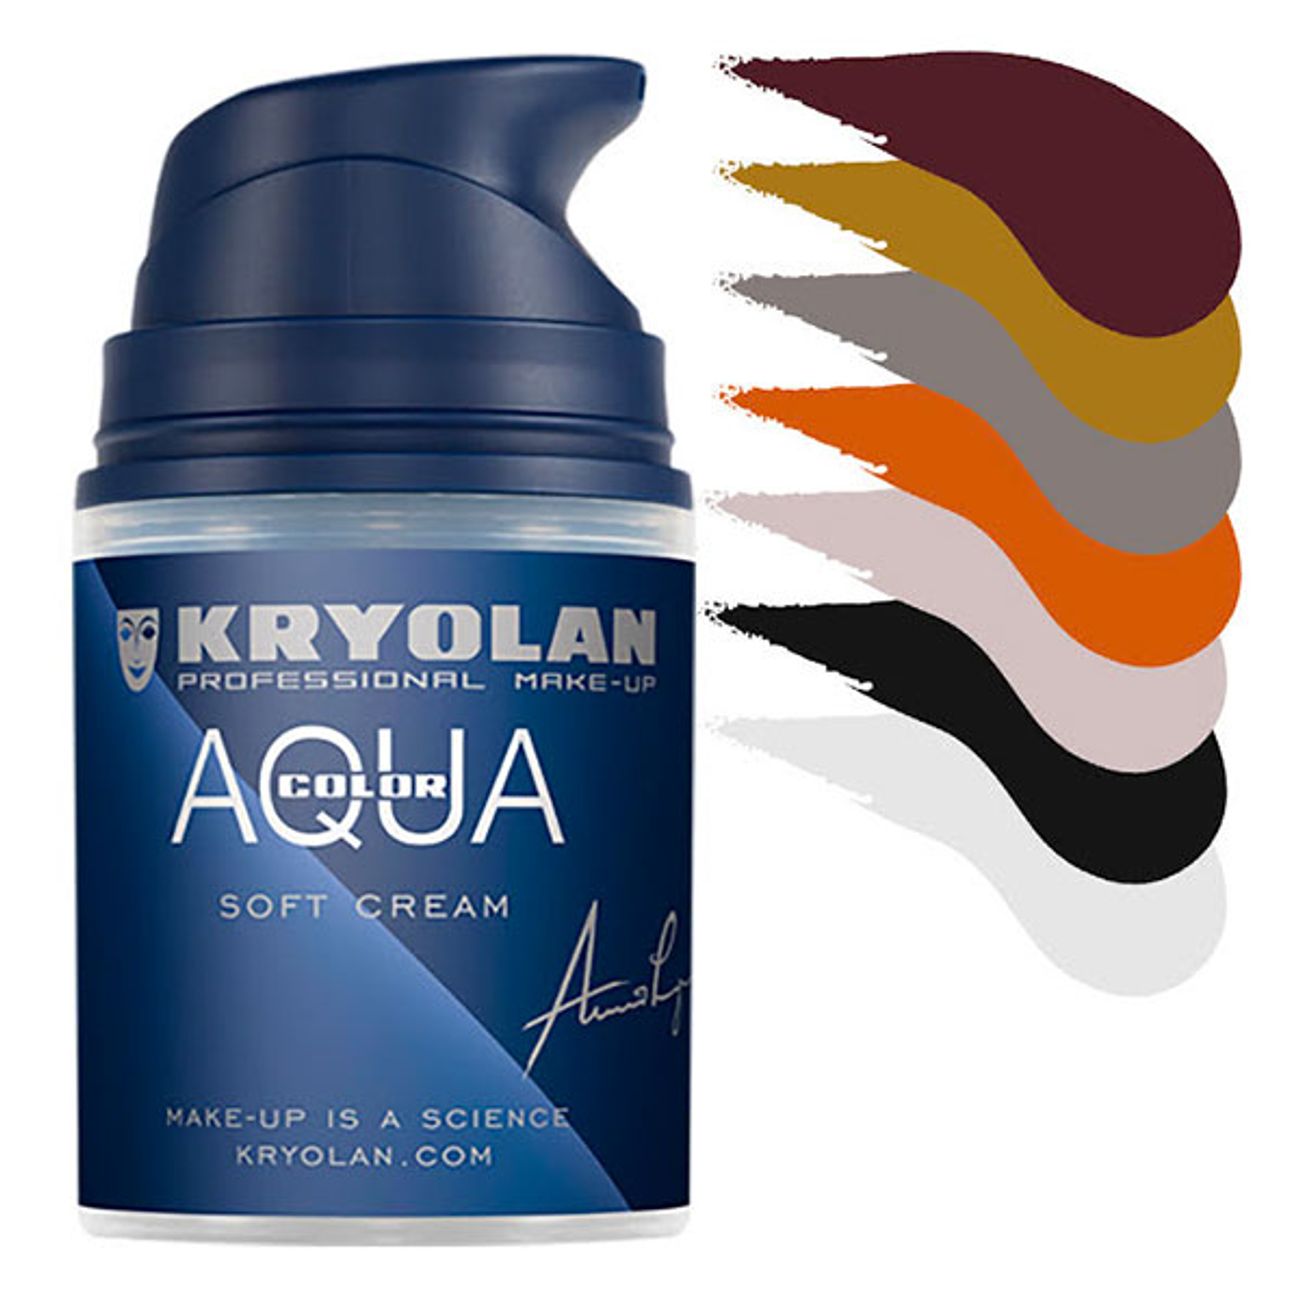 Kryolan Aquacolor Soft Cream